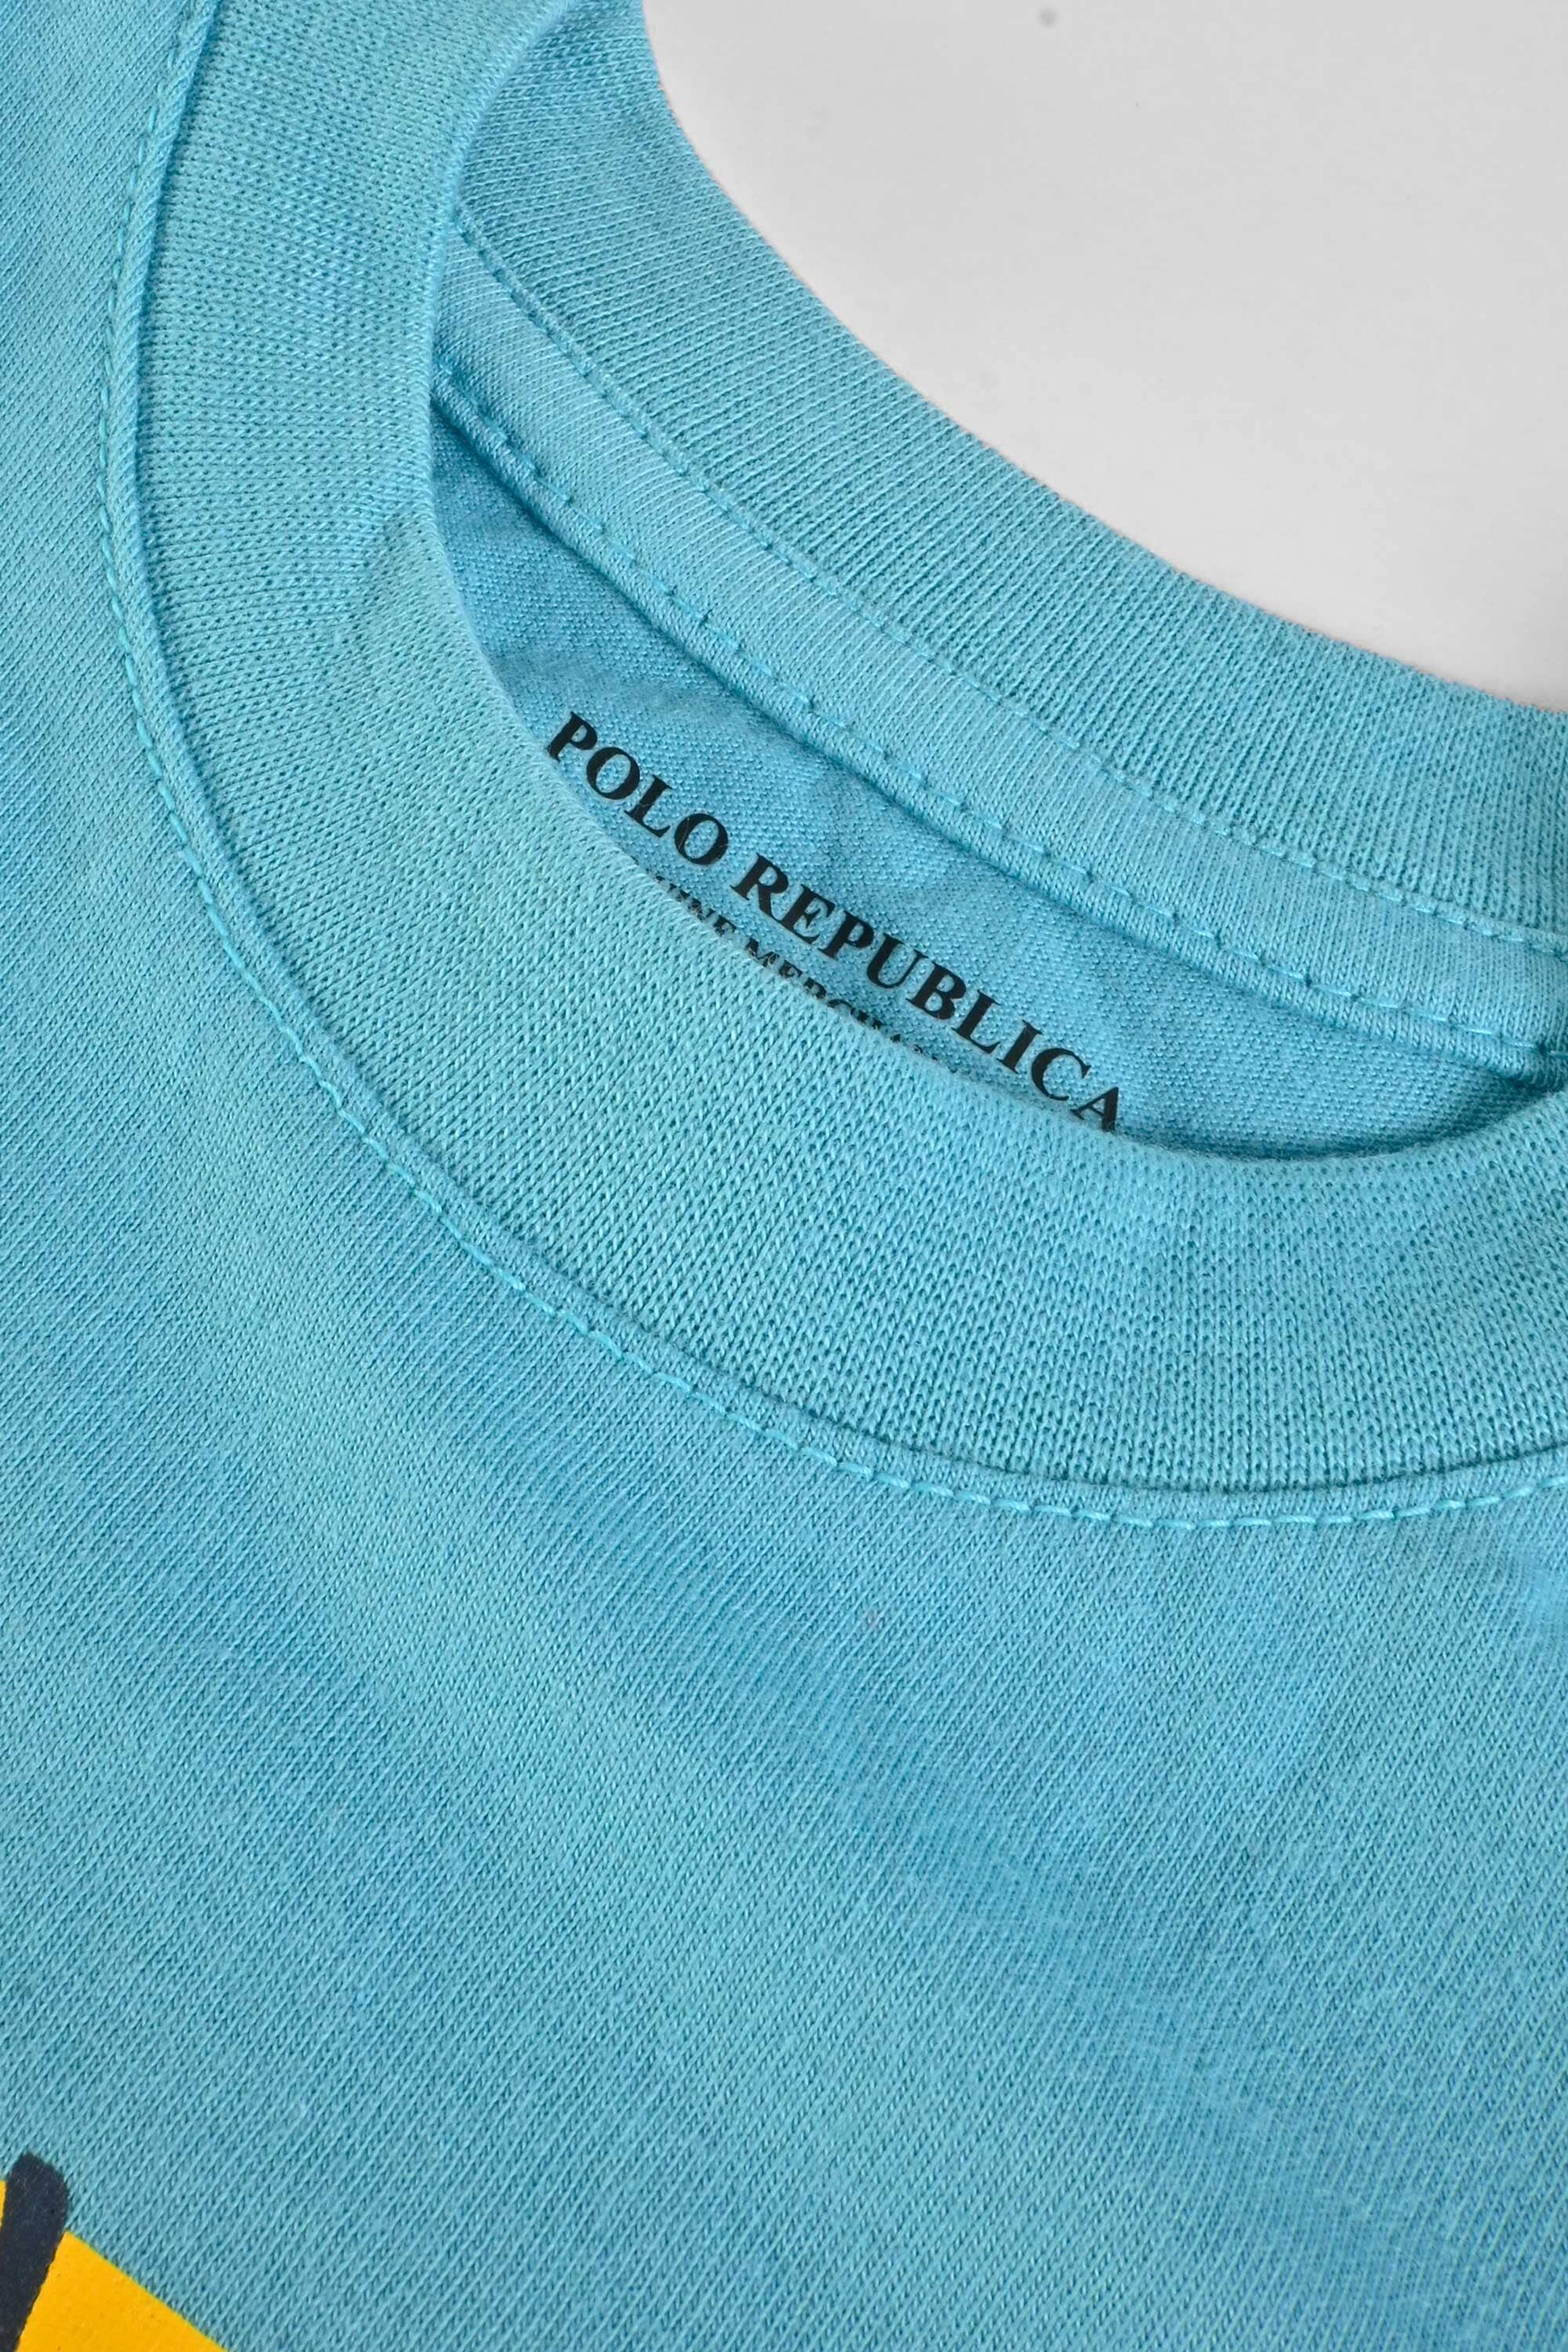 Polo Republica Boy's I'M Roarsome! Printed Tee Shirt